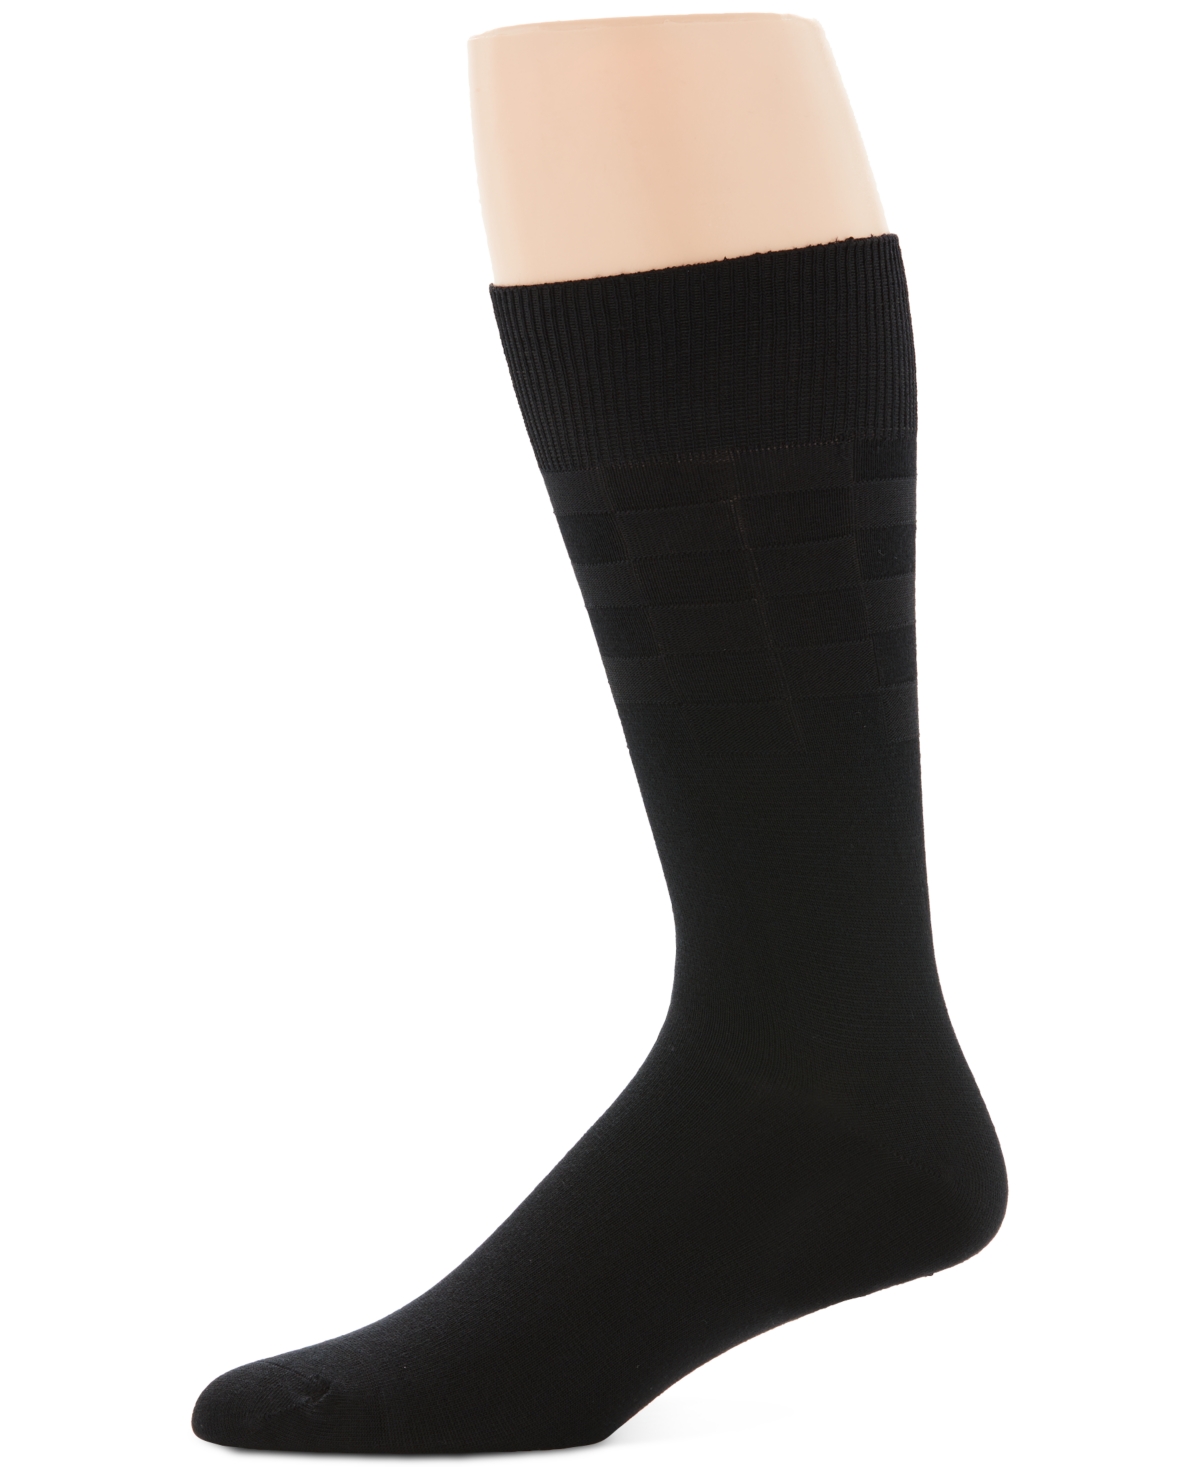 Perry Ellis Men's Socks, Single Pack Triple S Men's Socks - Black